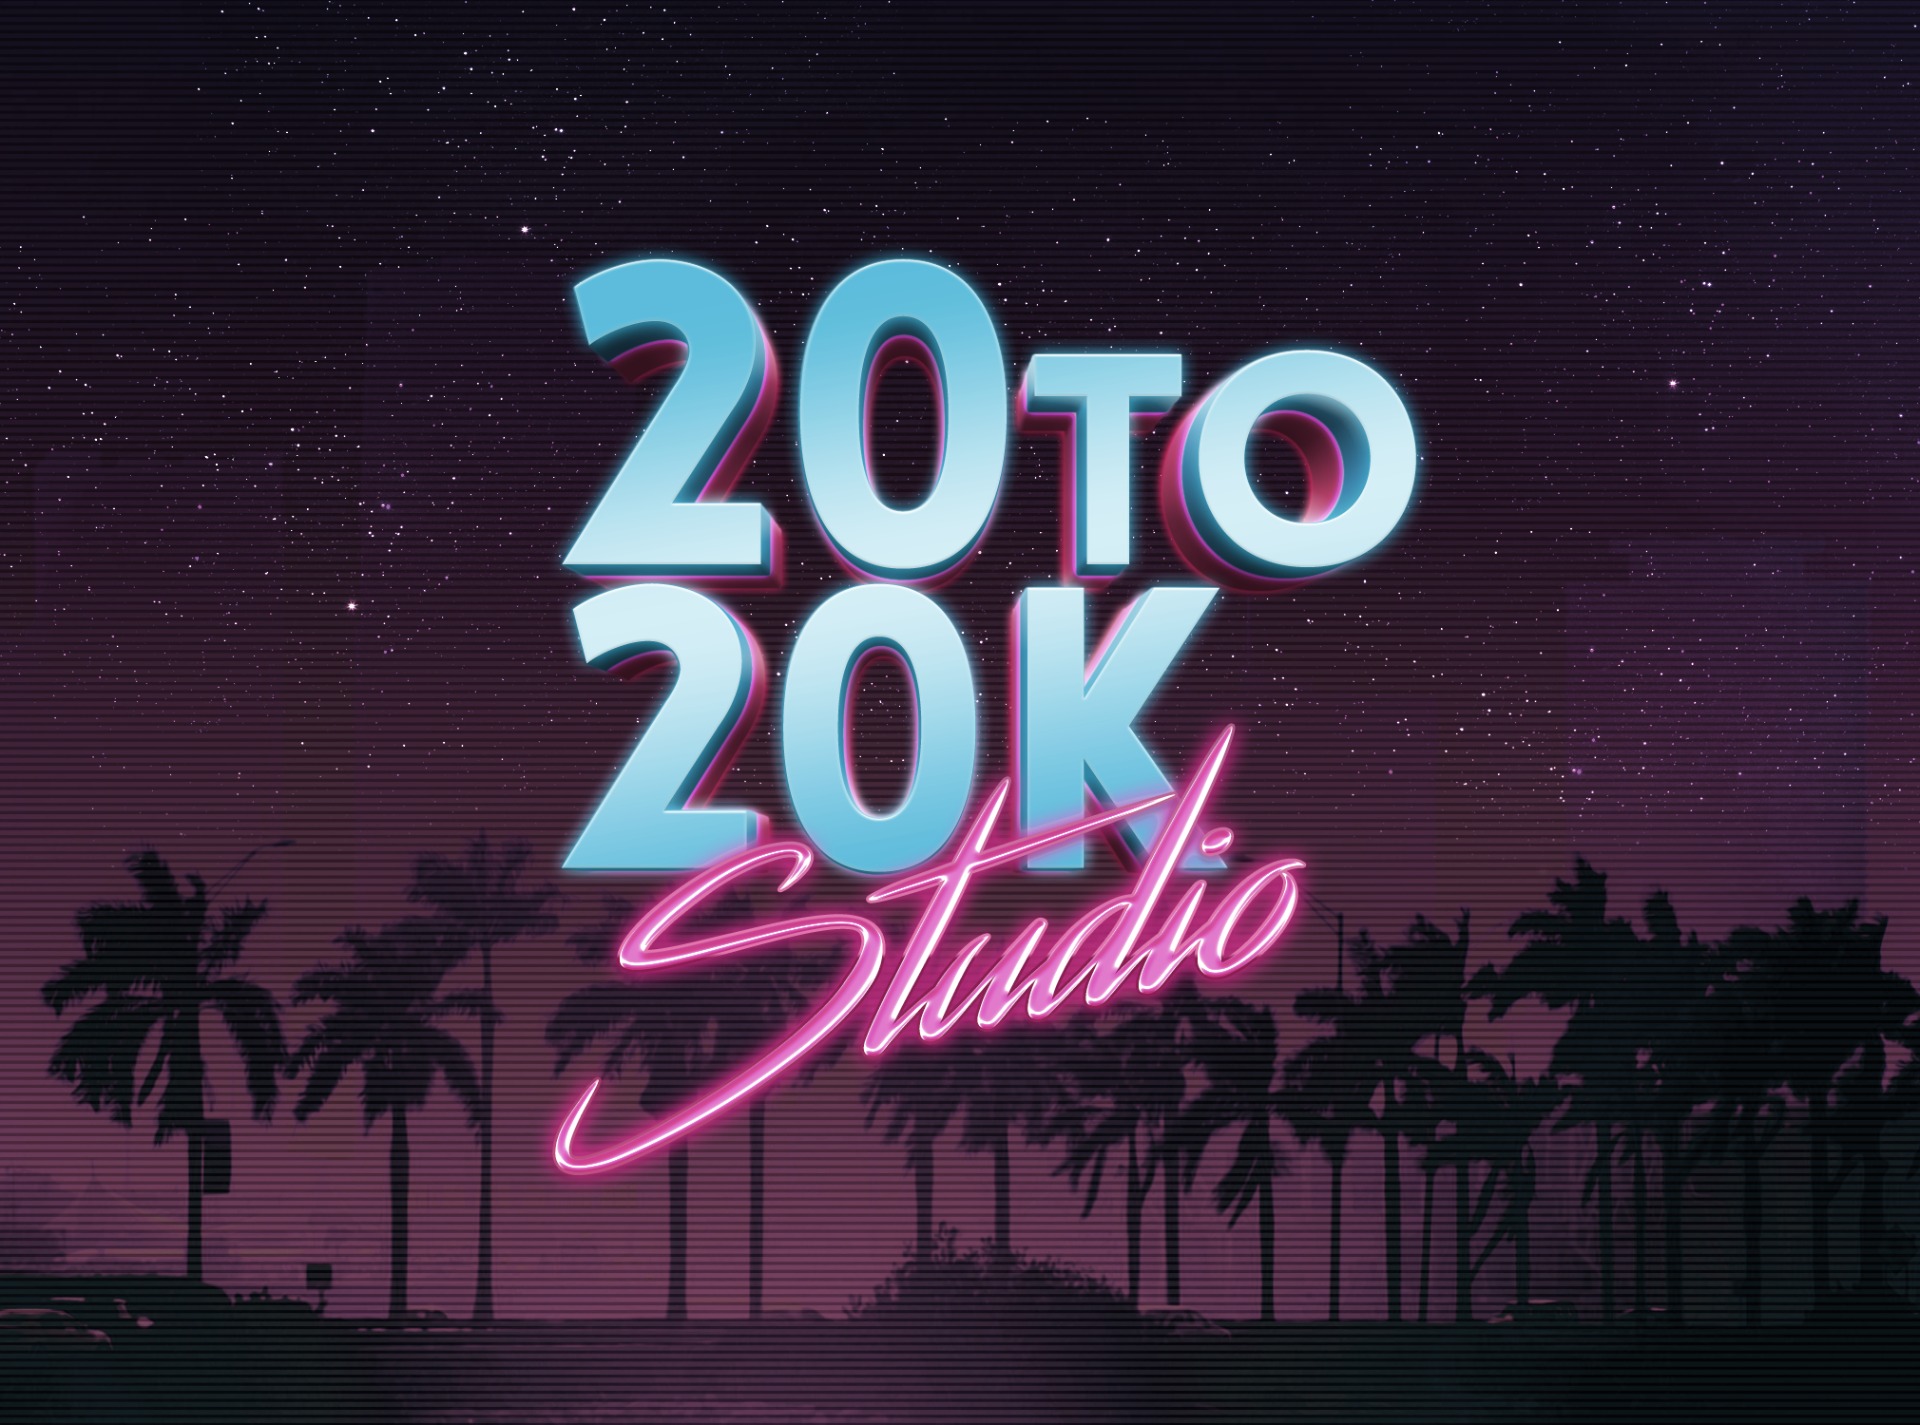 Logo 20to20k studio